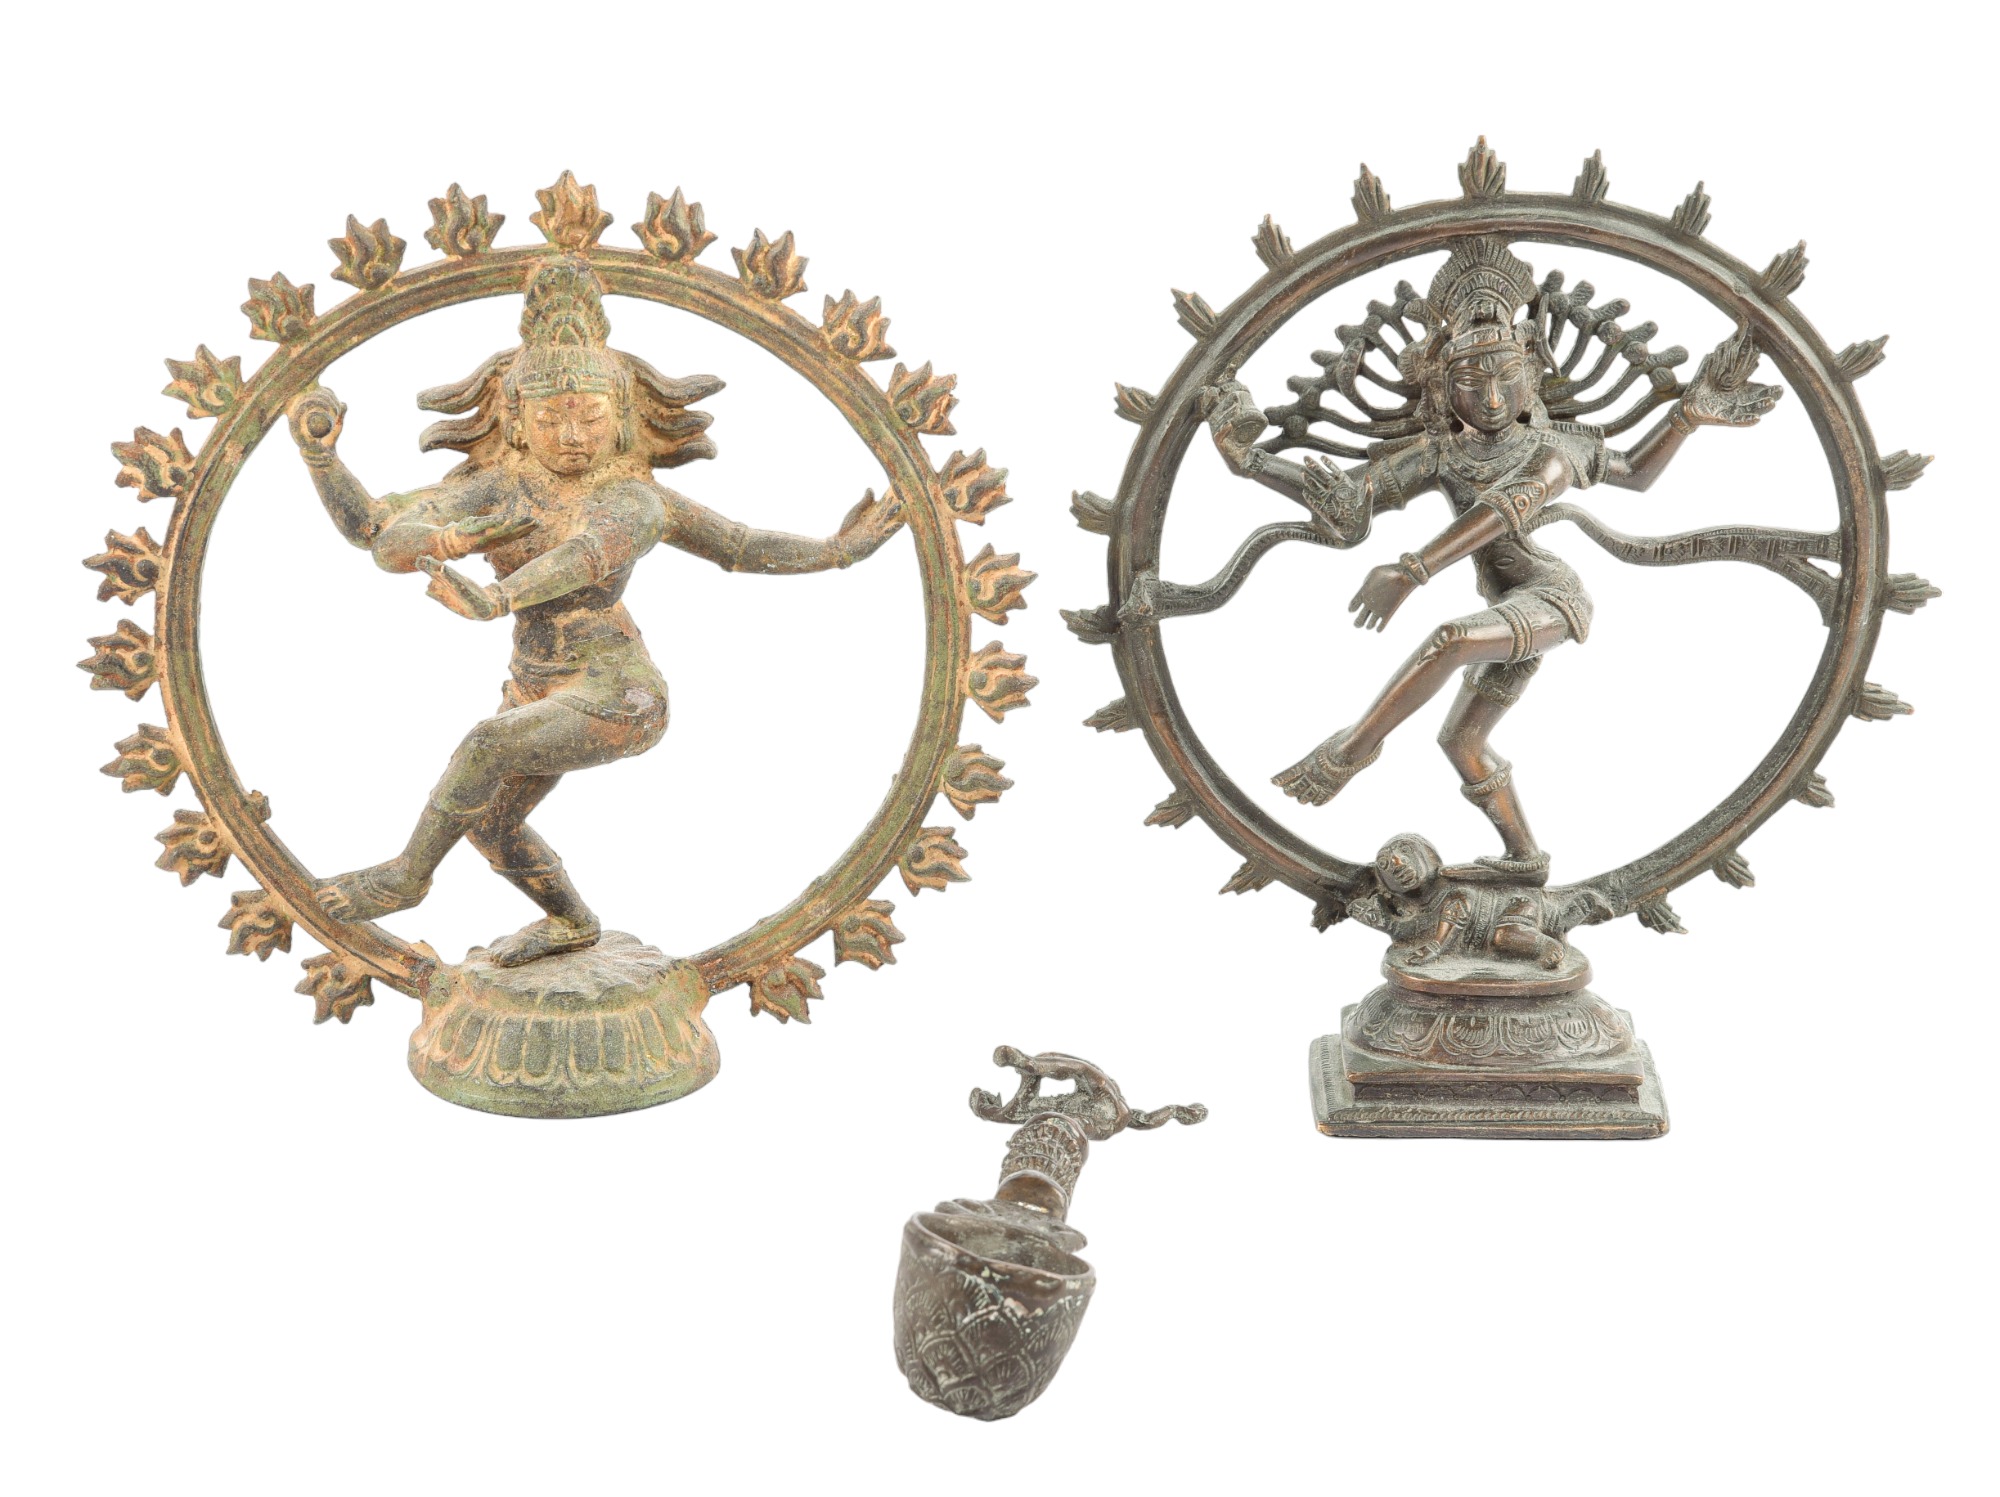 (3) Nataraja dancing Shiva items,